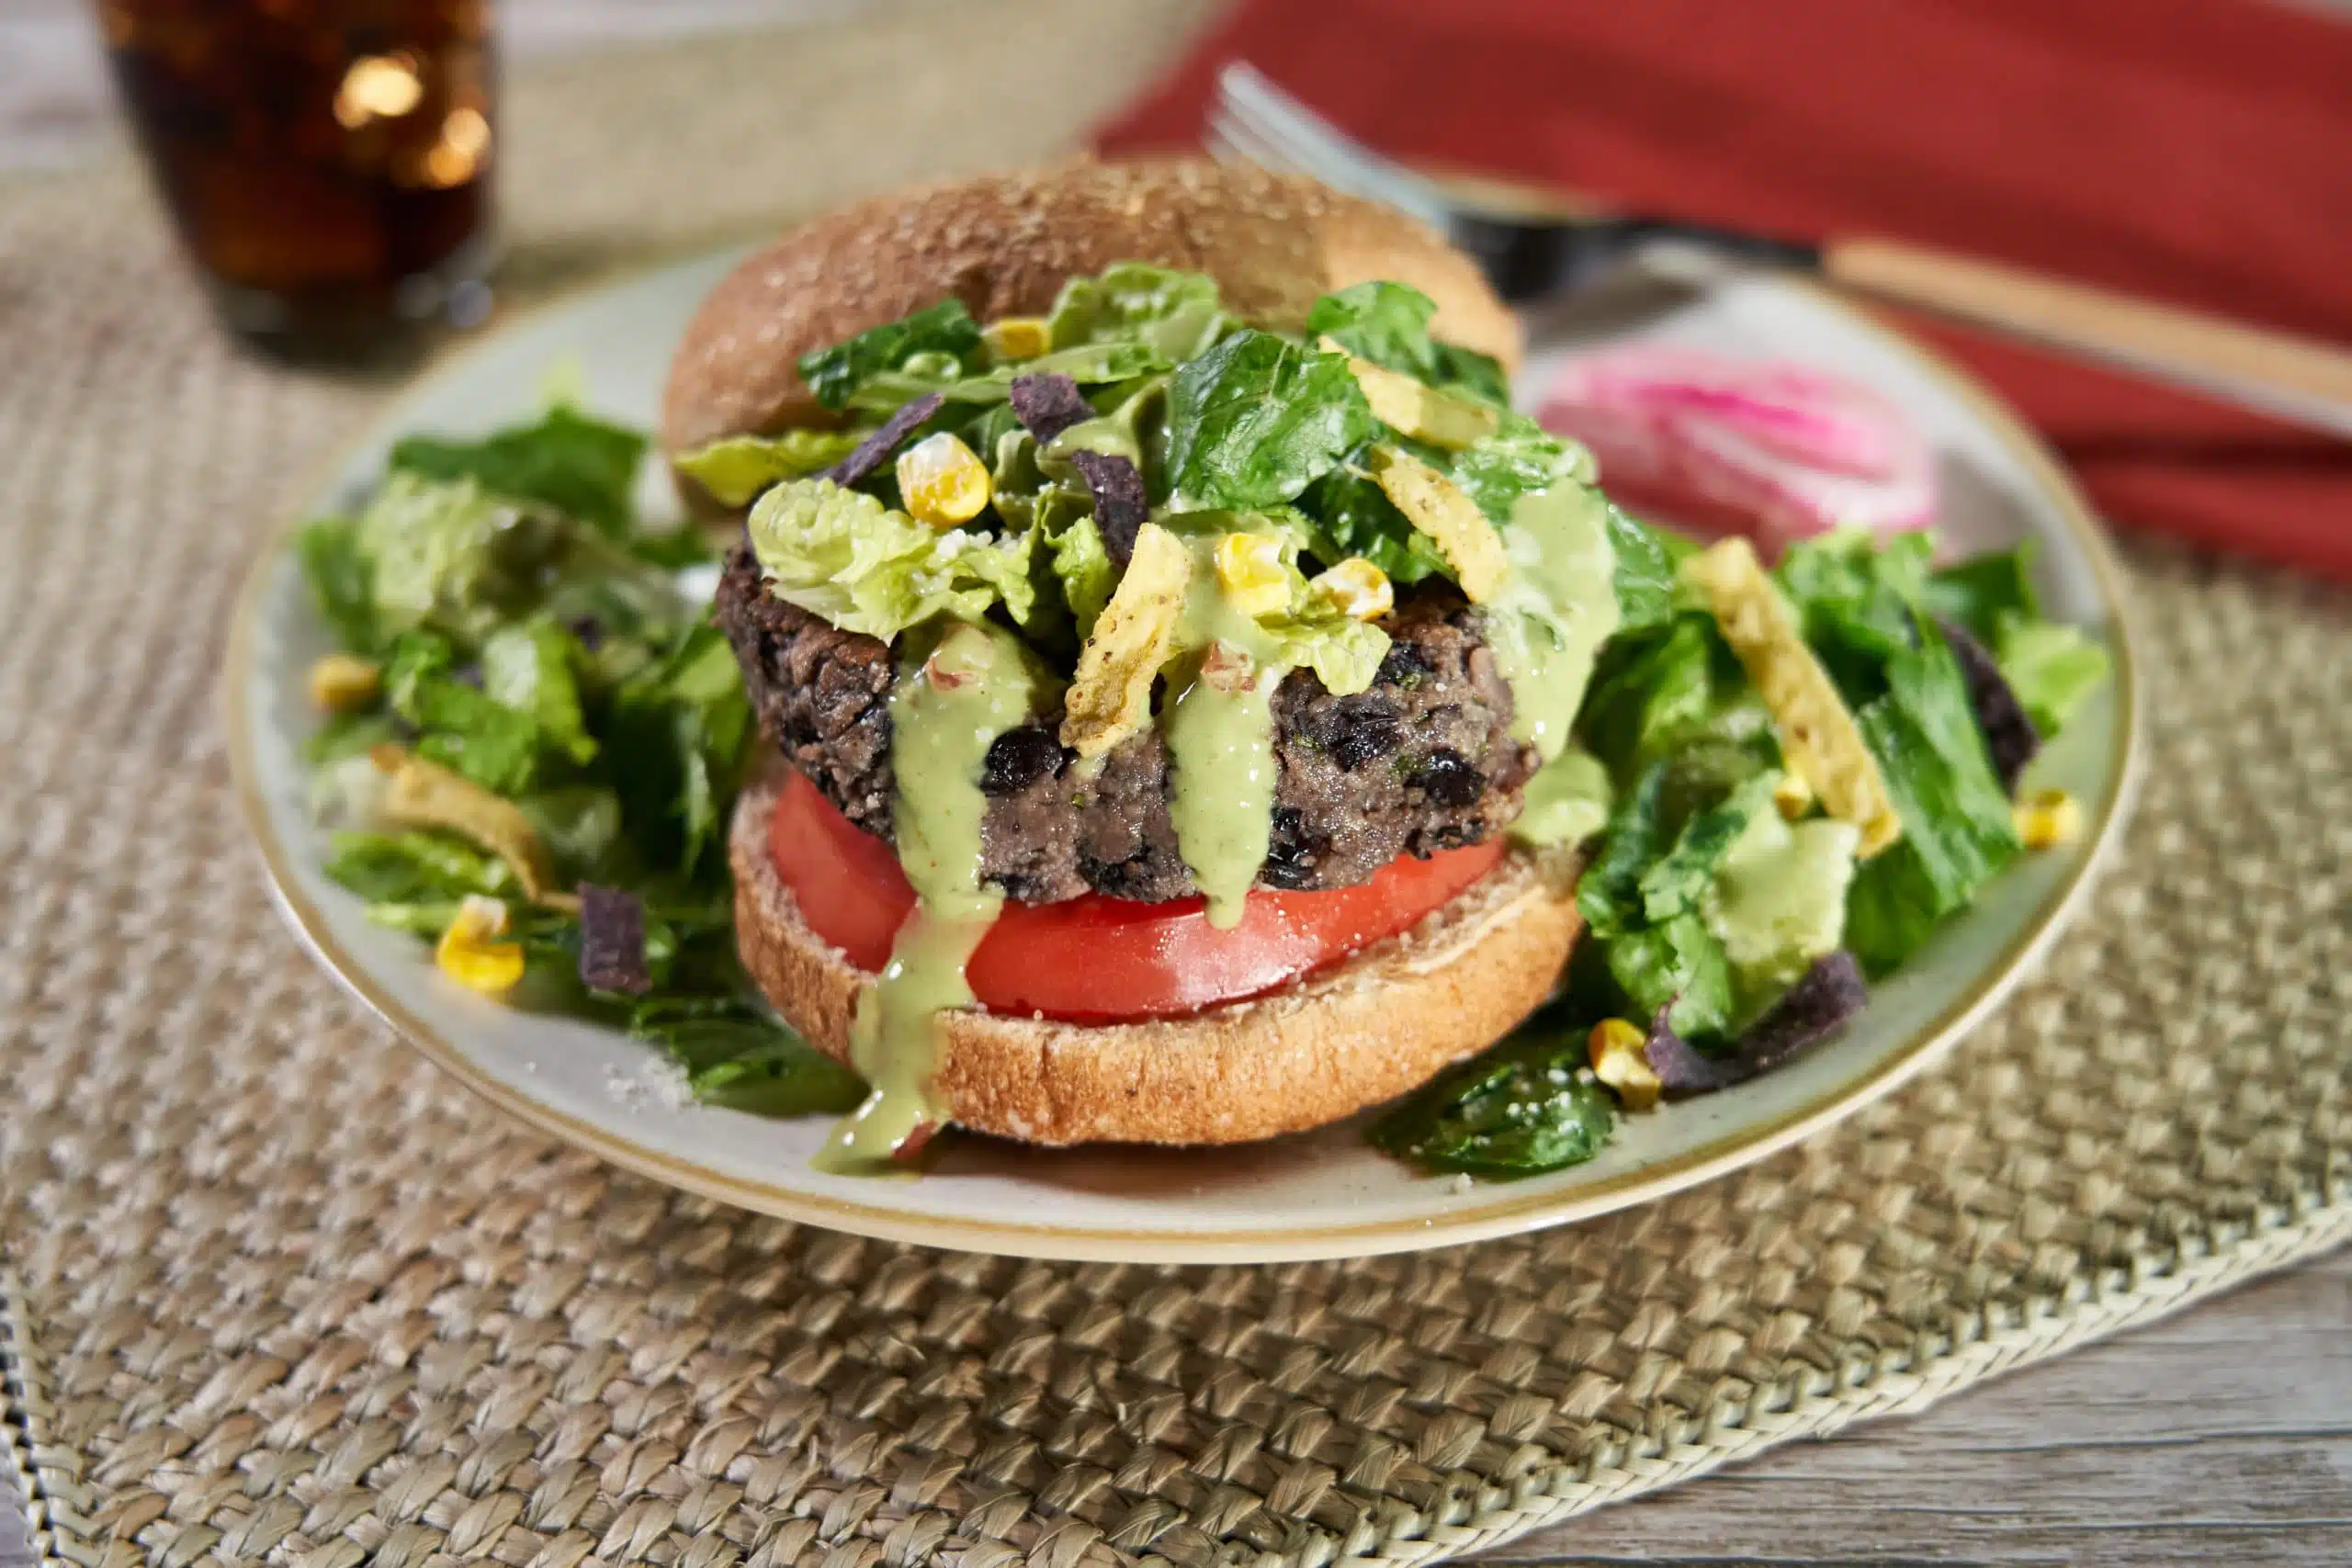 https://www.freshexpress.com/wp-content/uploads/2021/06/Southwest-Black-Bean-Burger-with-Avocado-Salad-Topping-scaled-1.jpg.webp